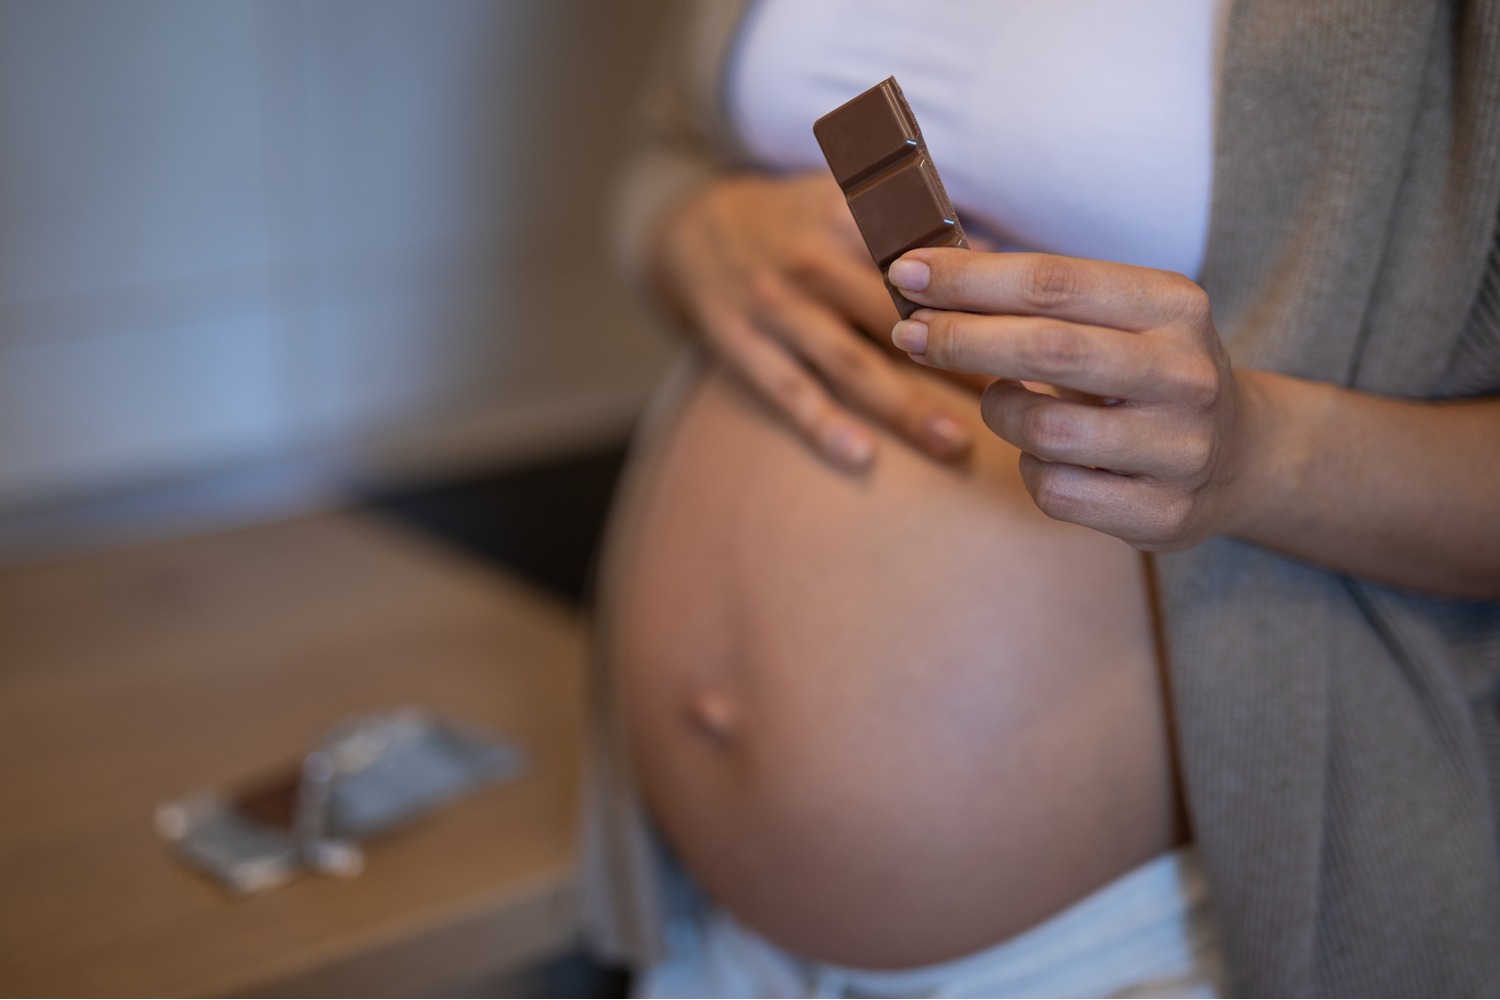 Pregnant woman portion control